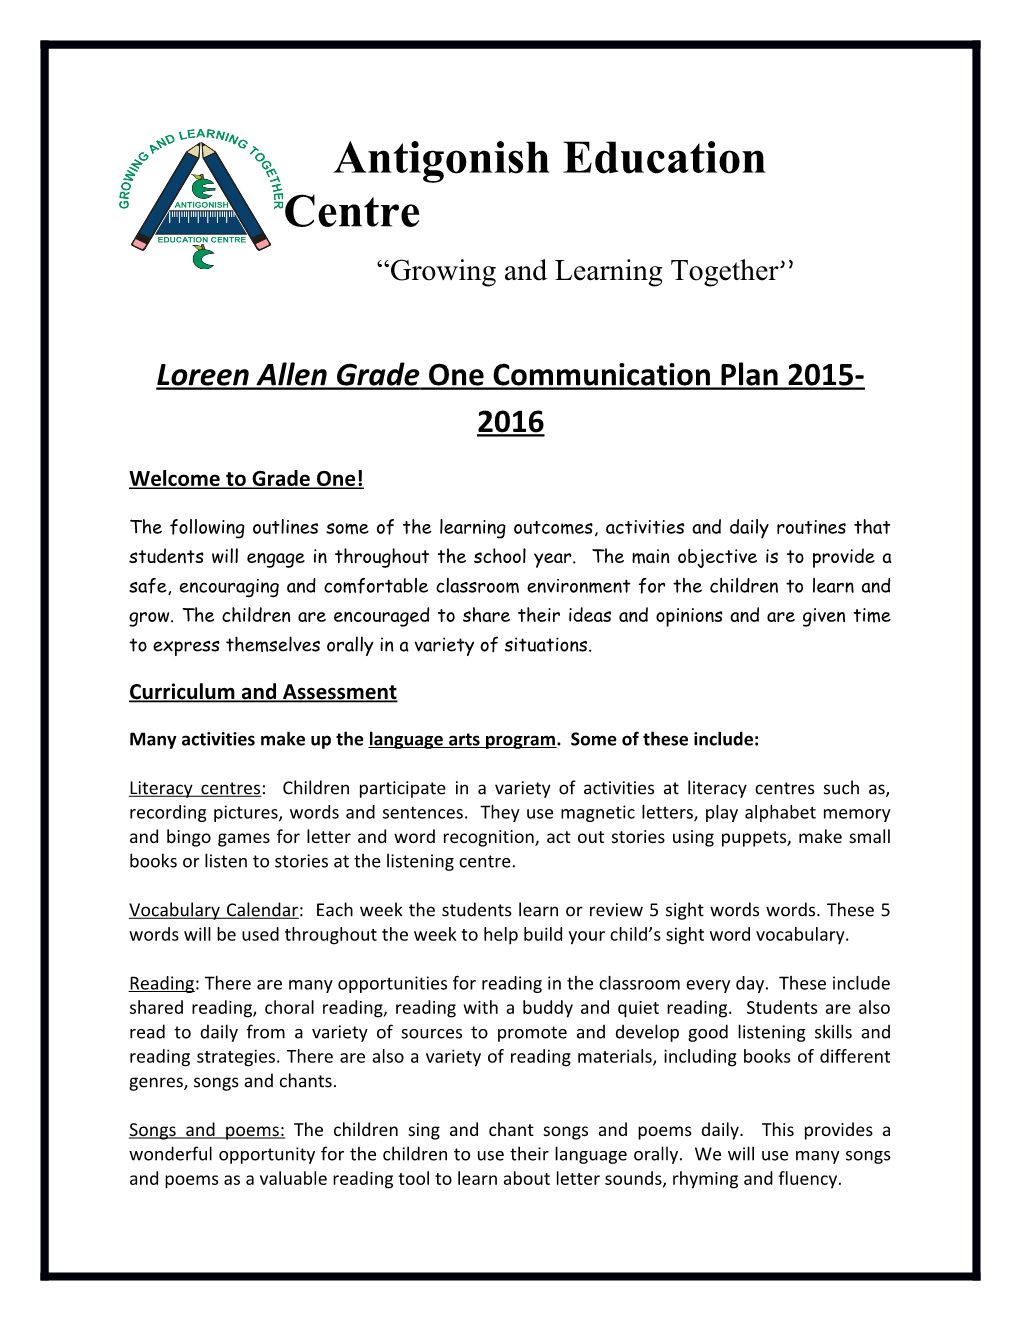 Loreen Allen Gradeone Communication Plan 2015-2016